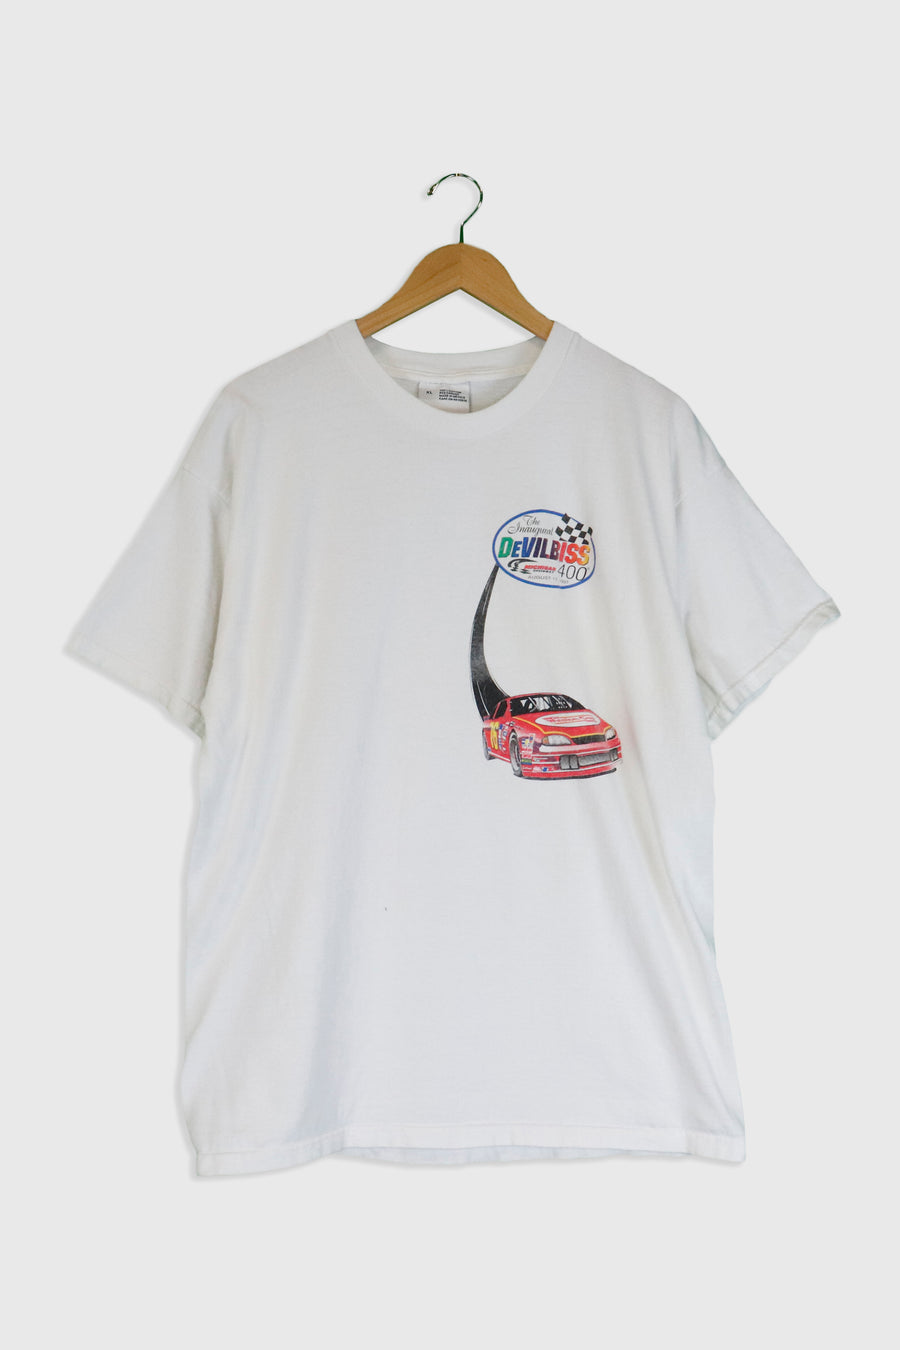 Vintage 1997 Michigan Speedway 400 T Shirt Sz XL